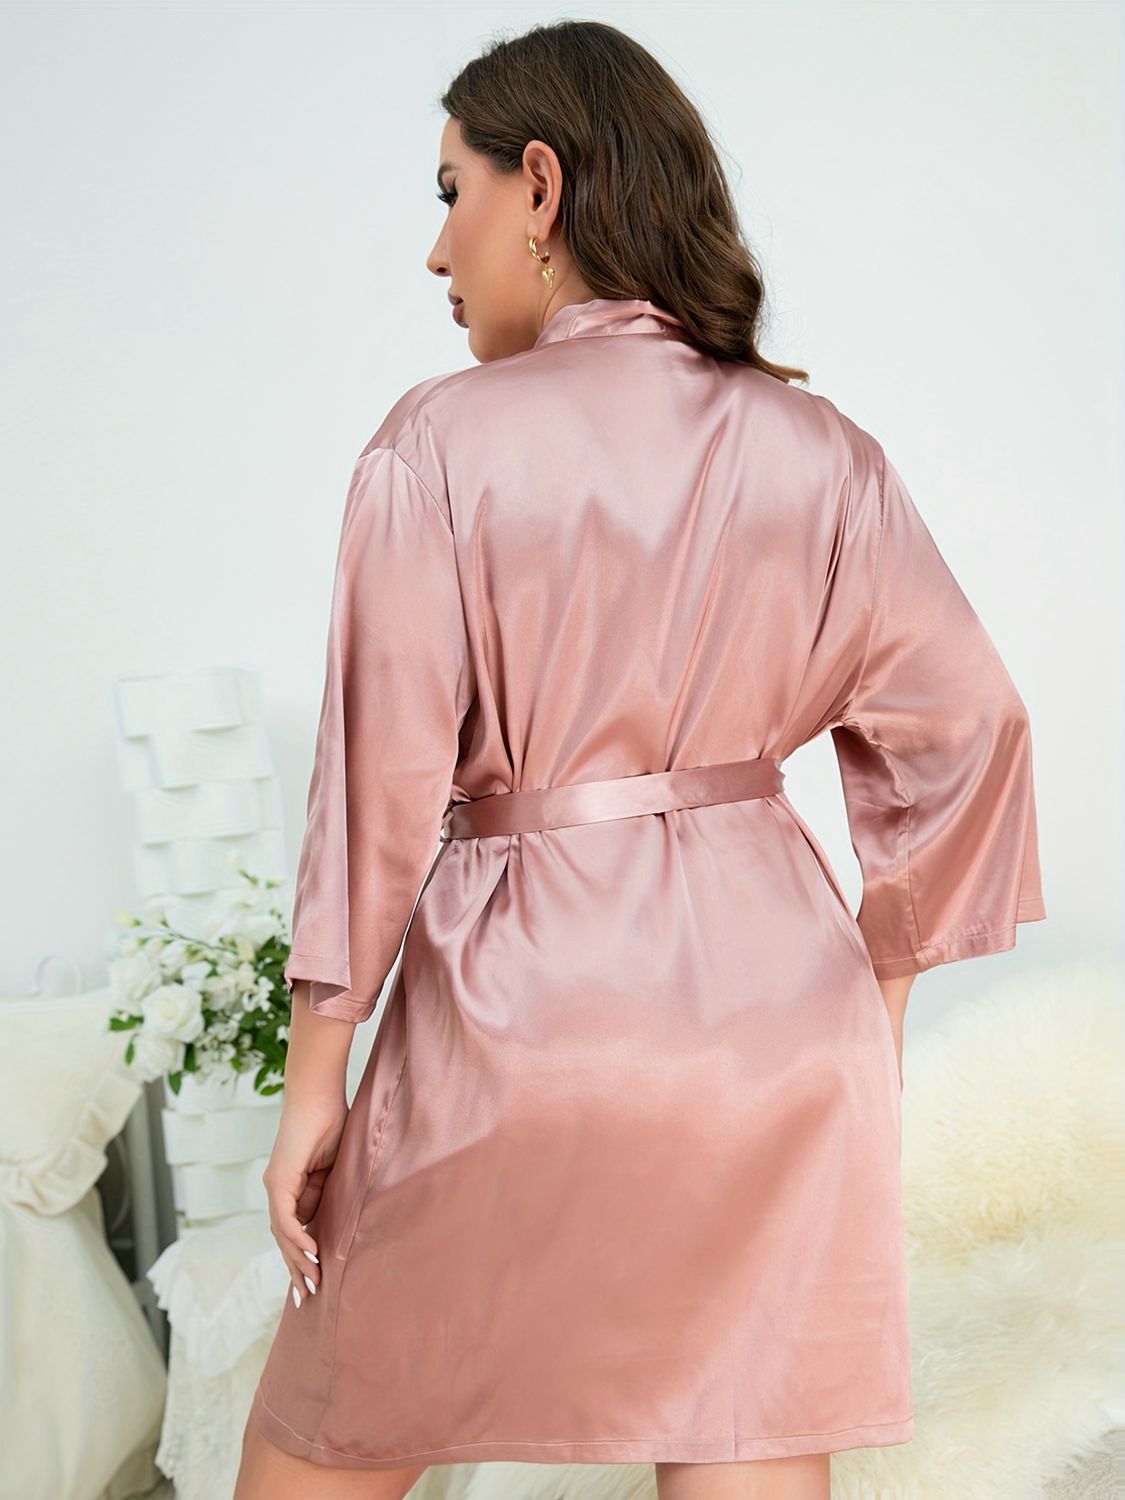 Back of model wearing pink plus size robe